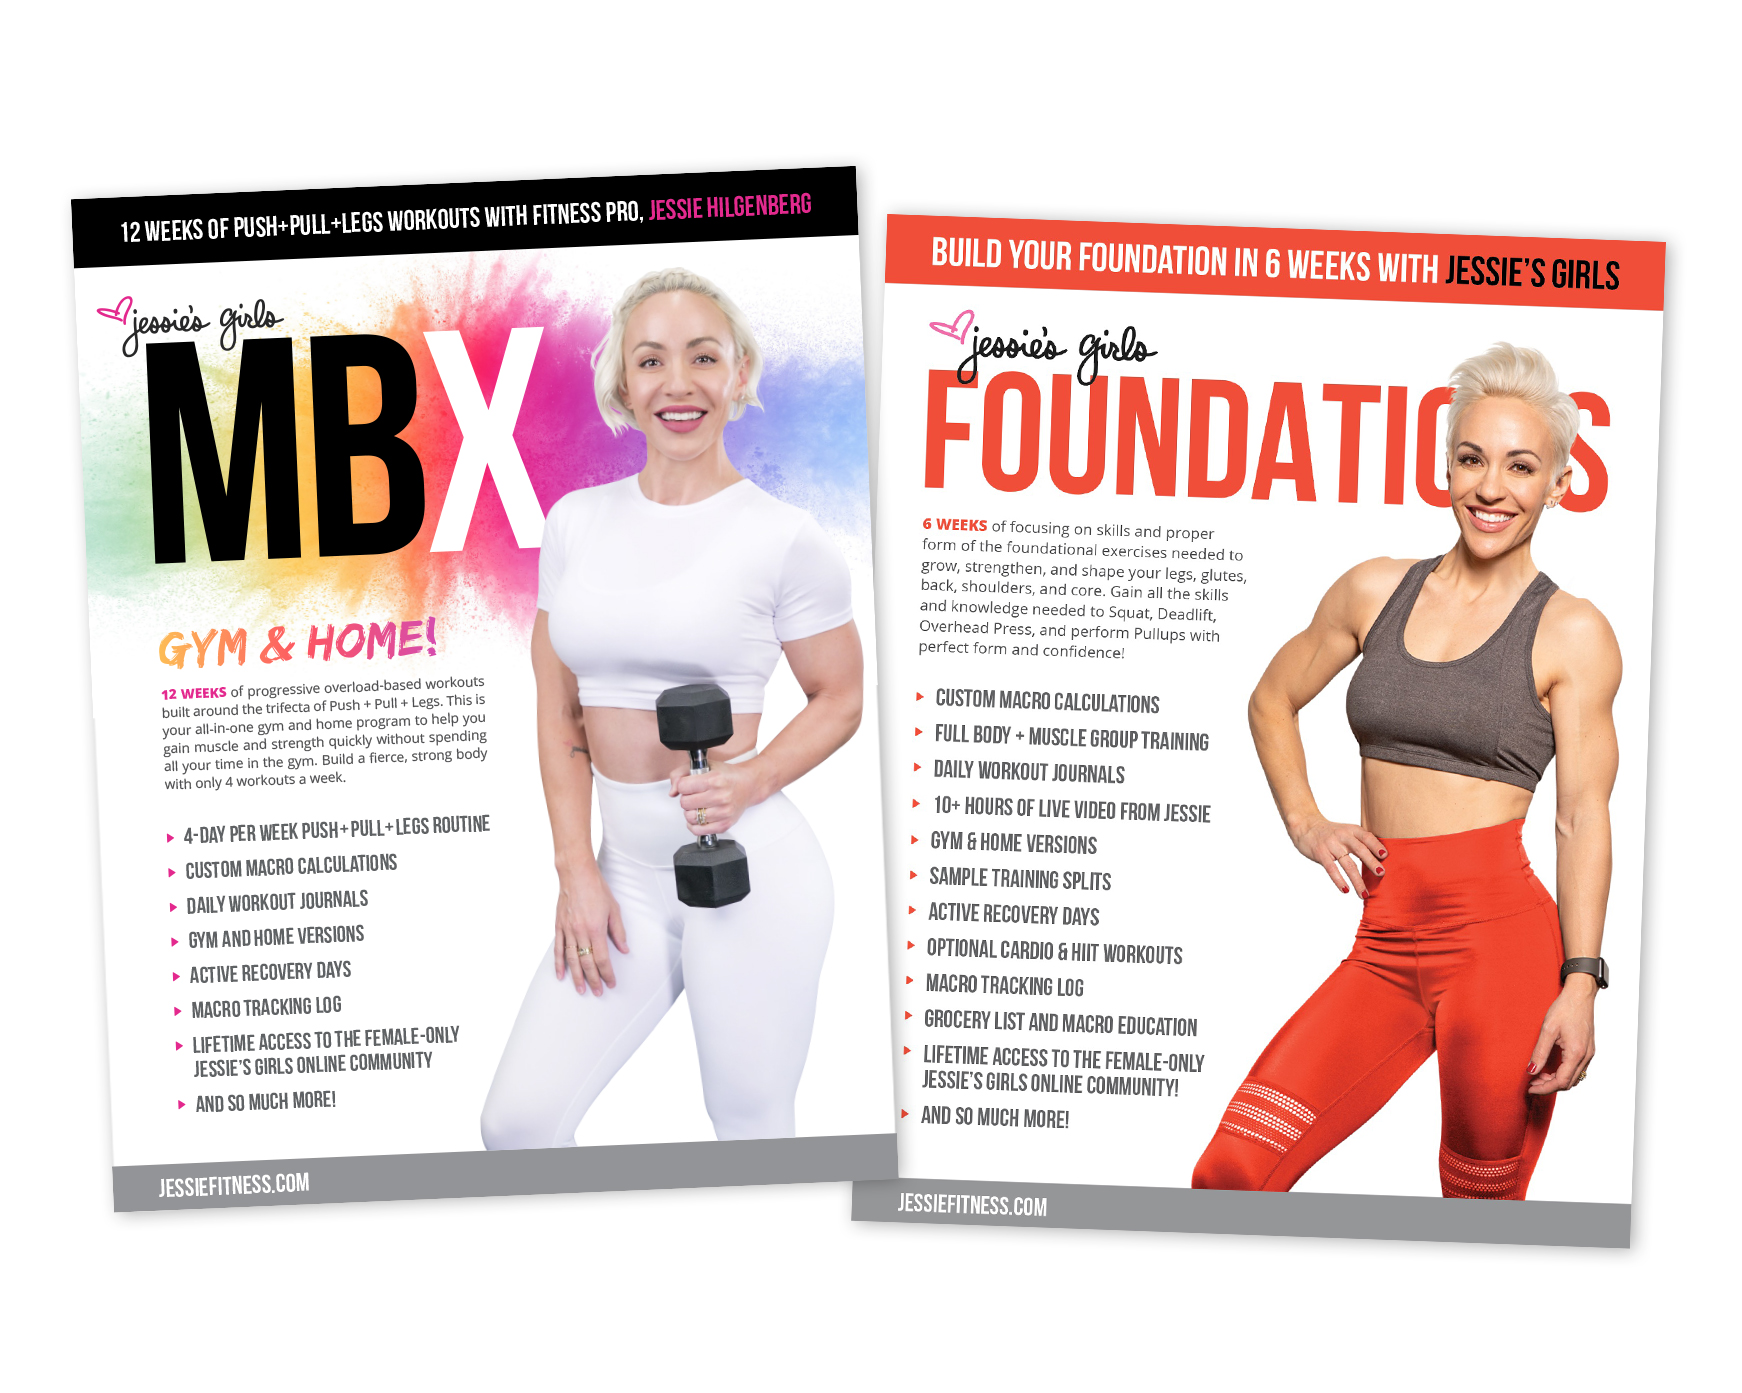 MBX-Foundations